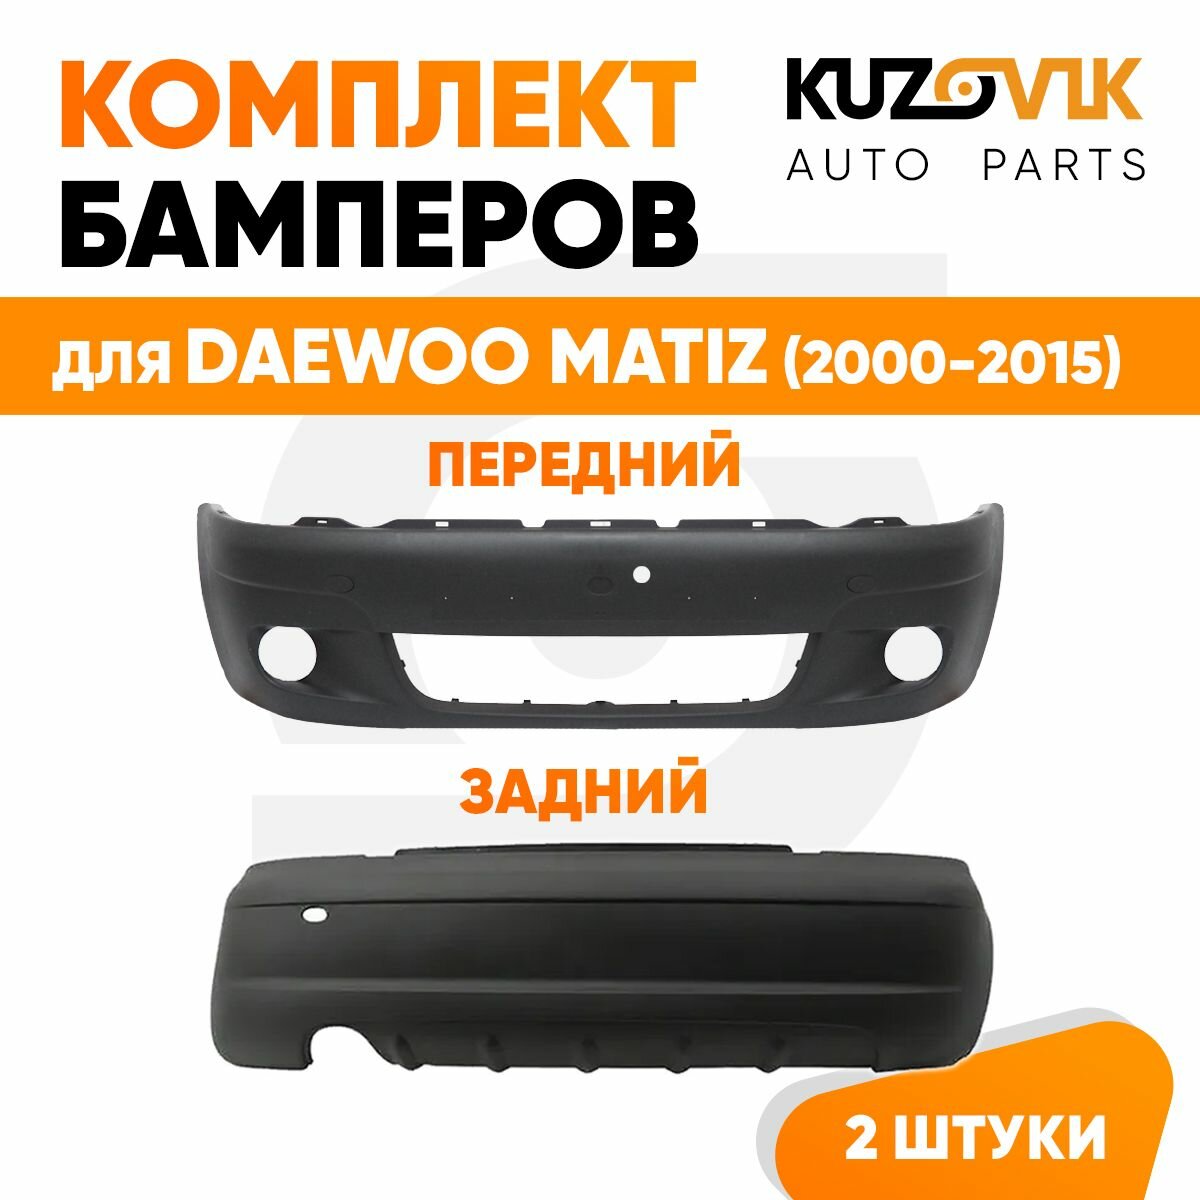 Бампера комплект передний и задний для Дэу Матиз Daewoo Matiz (2000-2015) 2 штуки